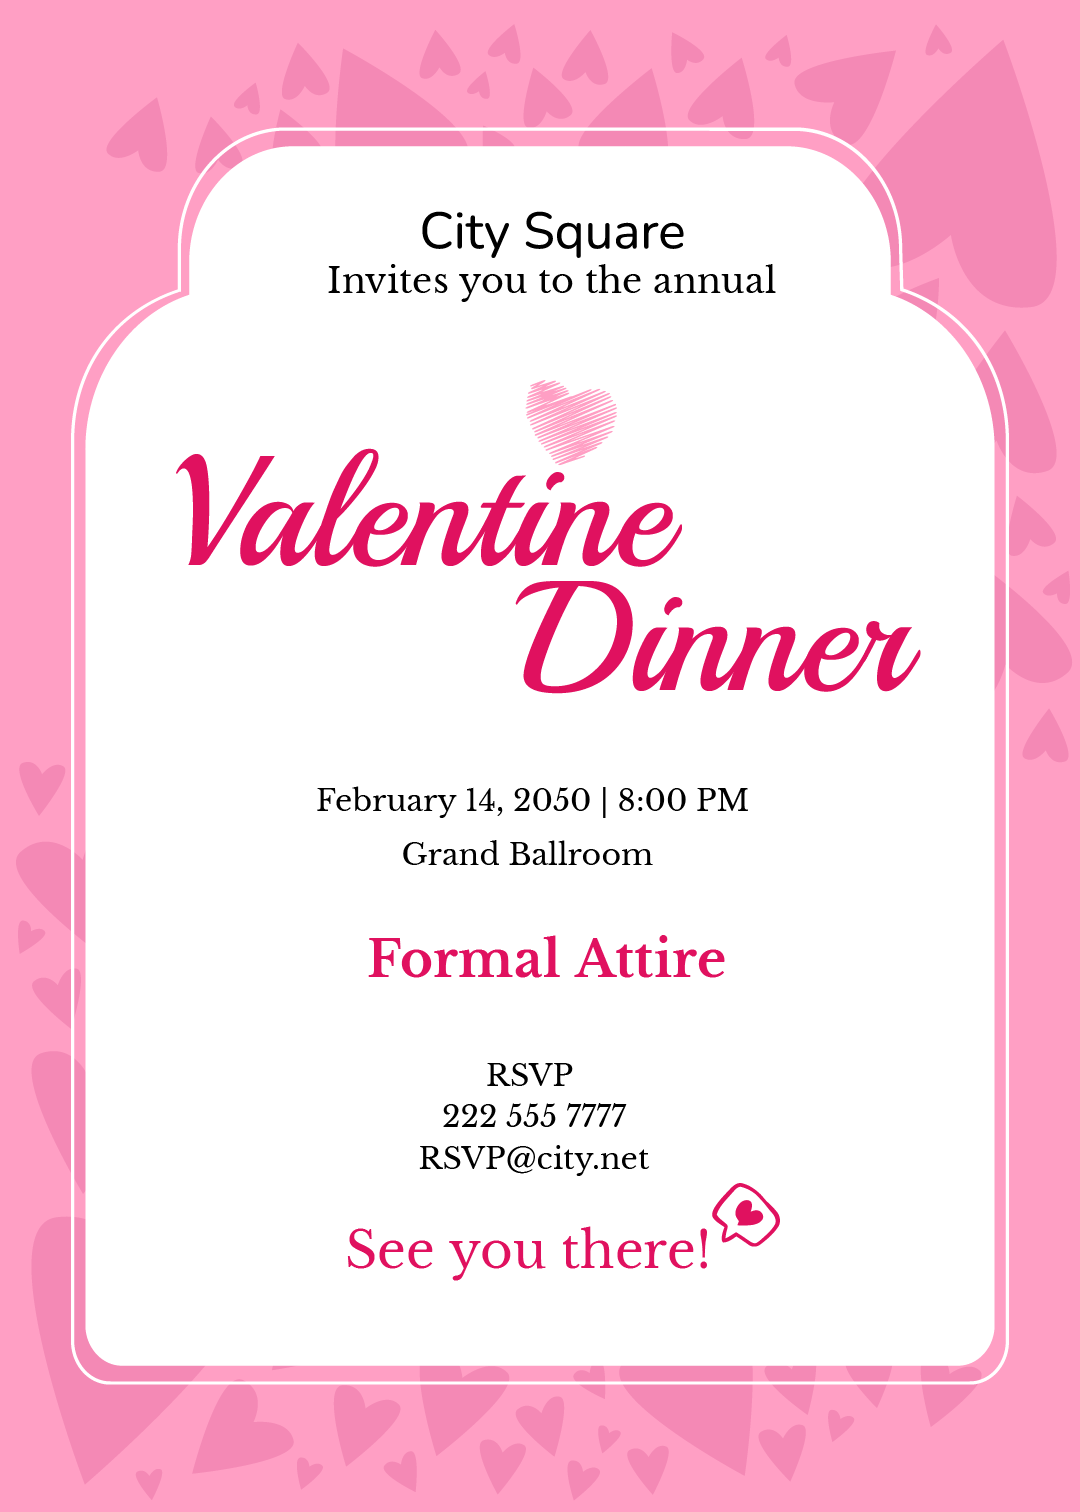 Valentine's Day Dinner Invitation Template